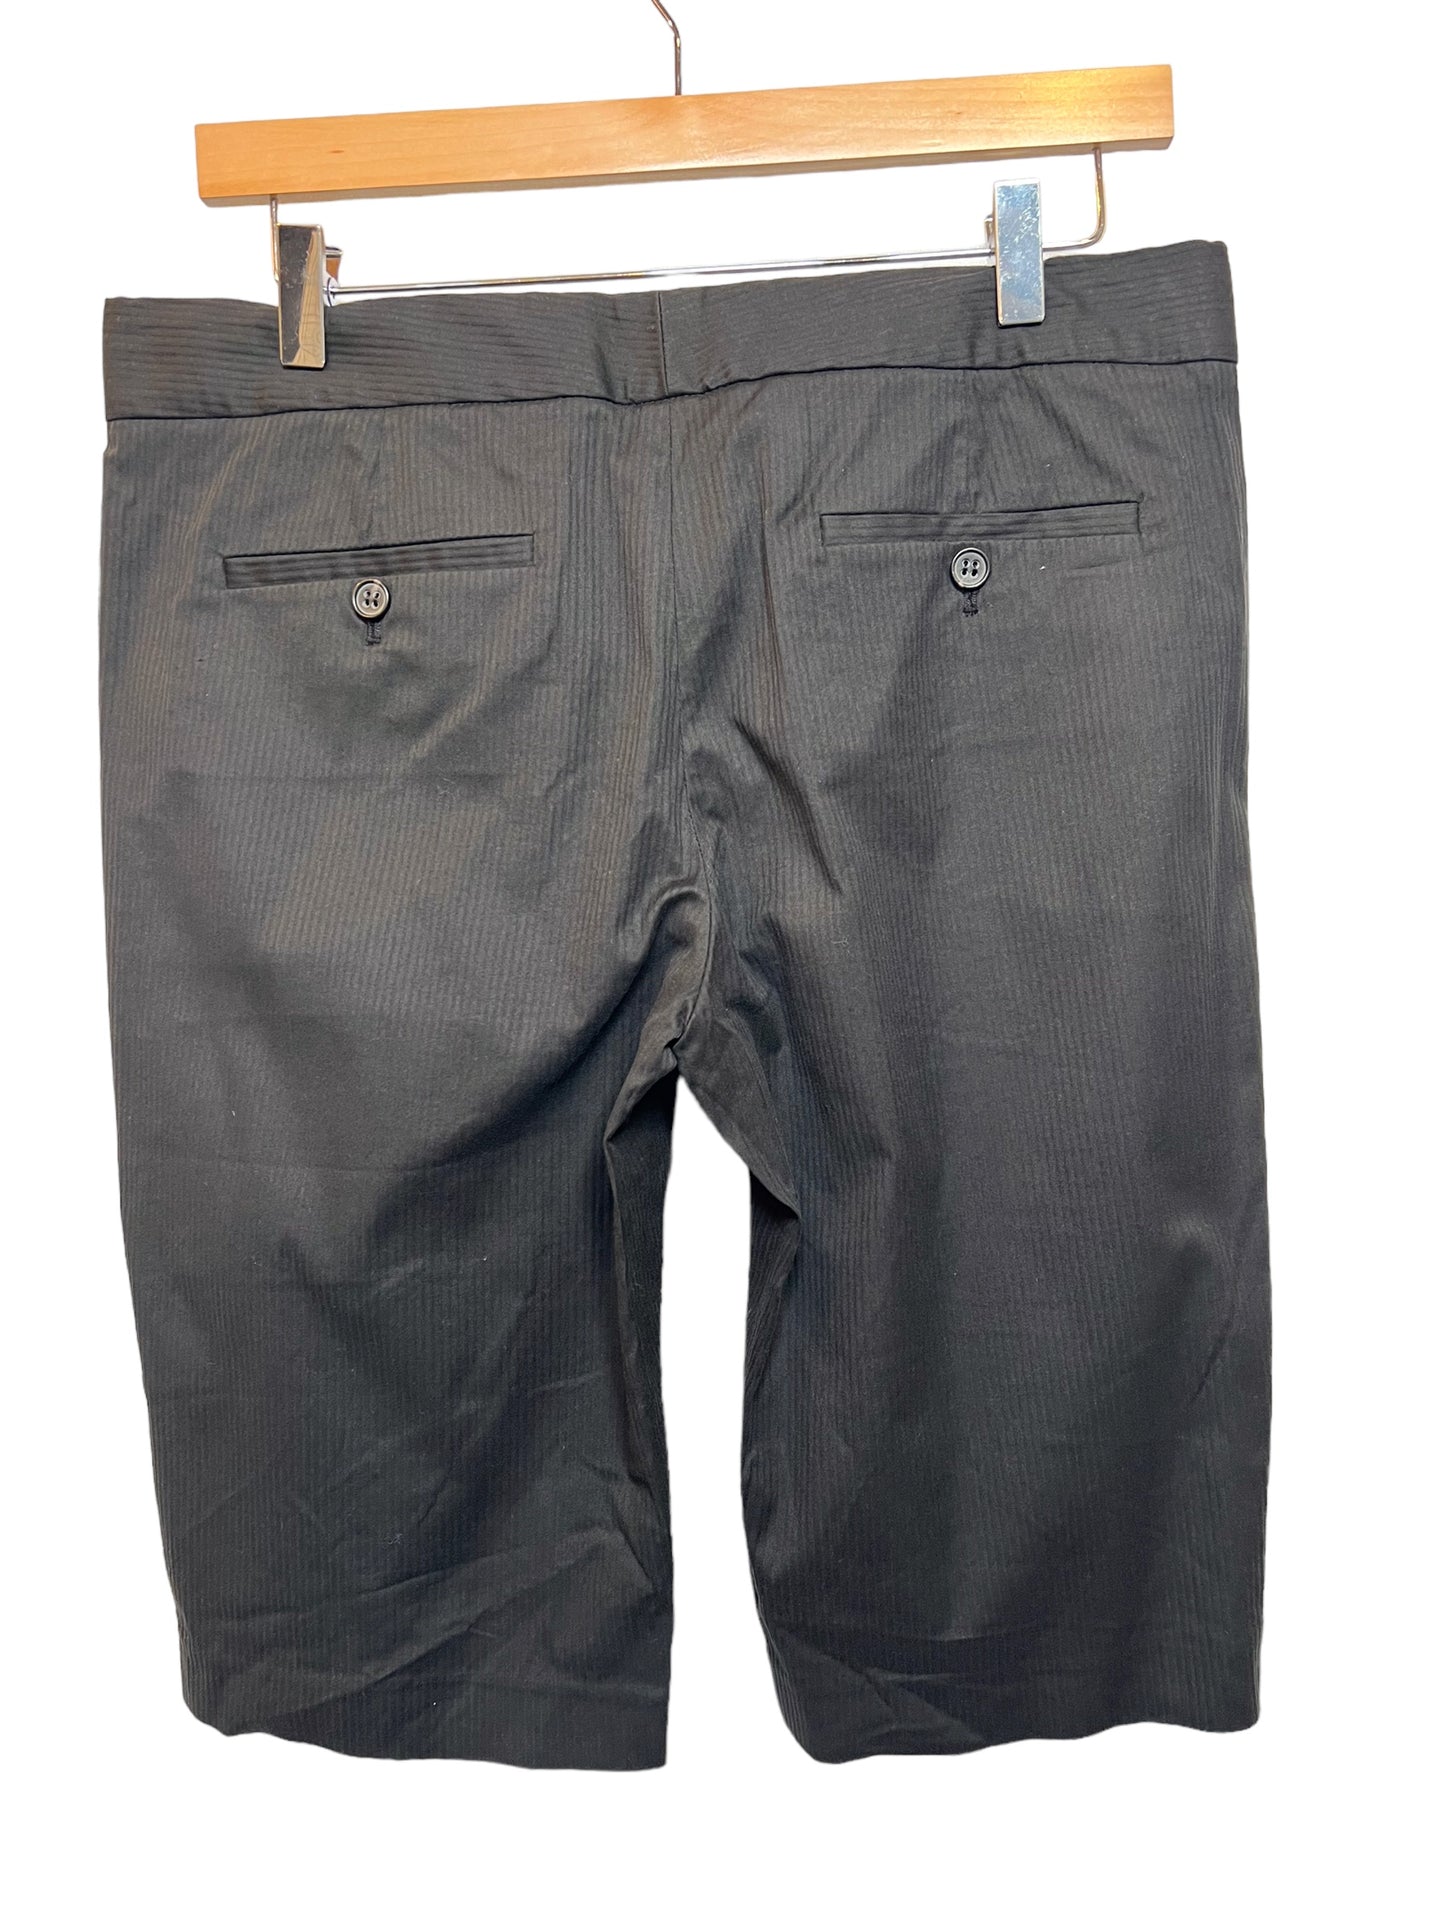 Men’s Black Smart Shorts (Size M)